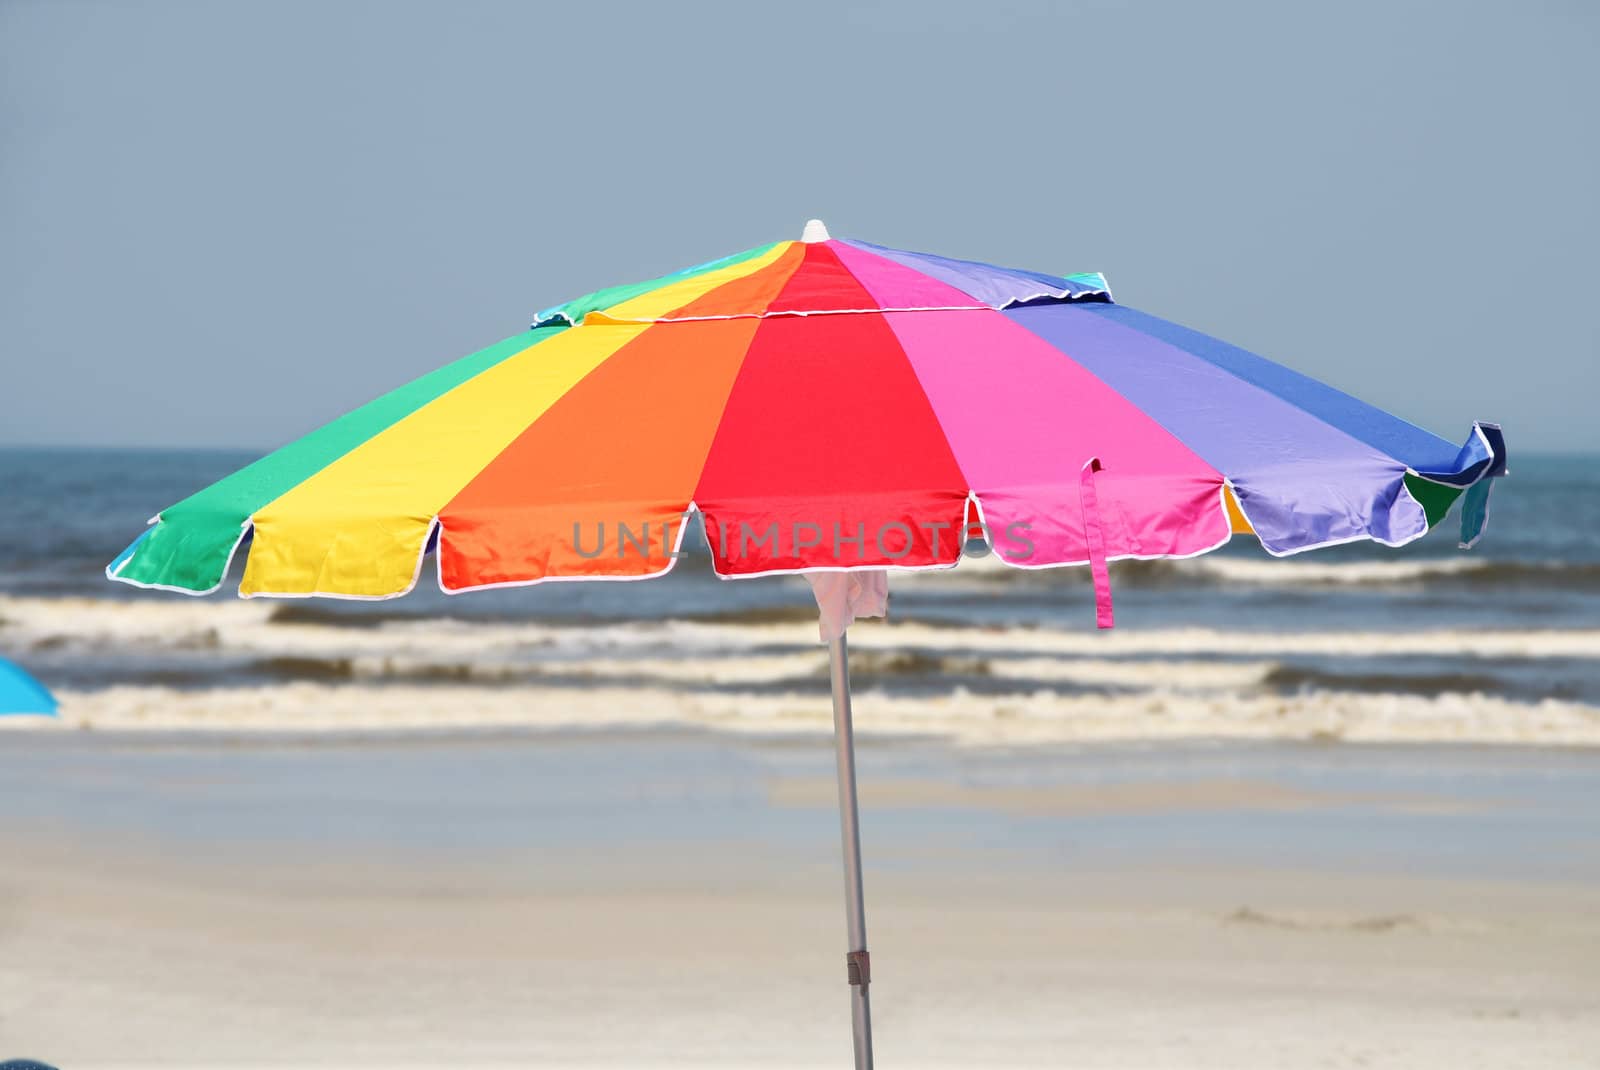 Colorful umbrella by beach by jarenwicklund